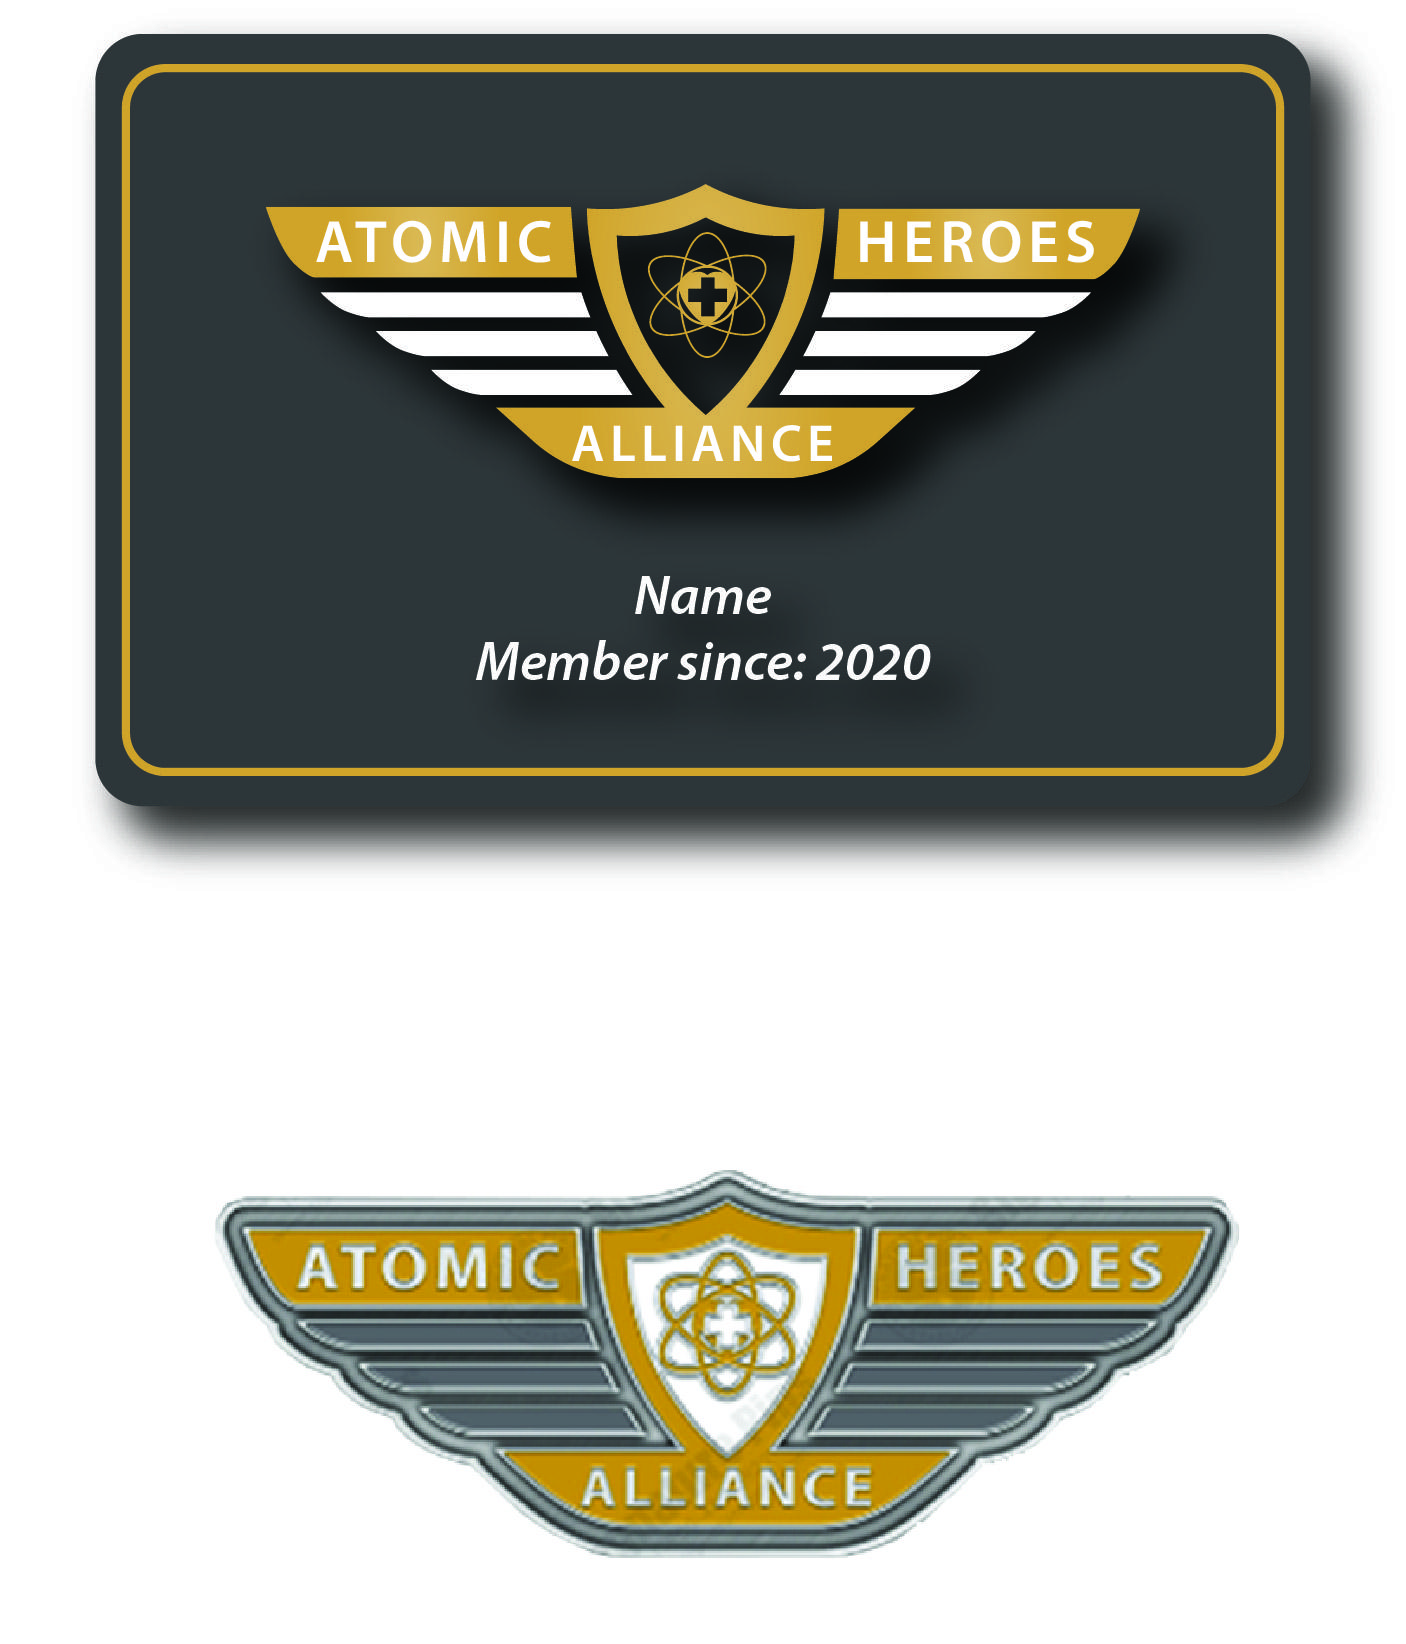 Atomic Heroes Alliance logo